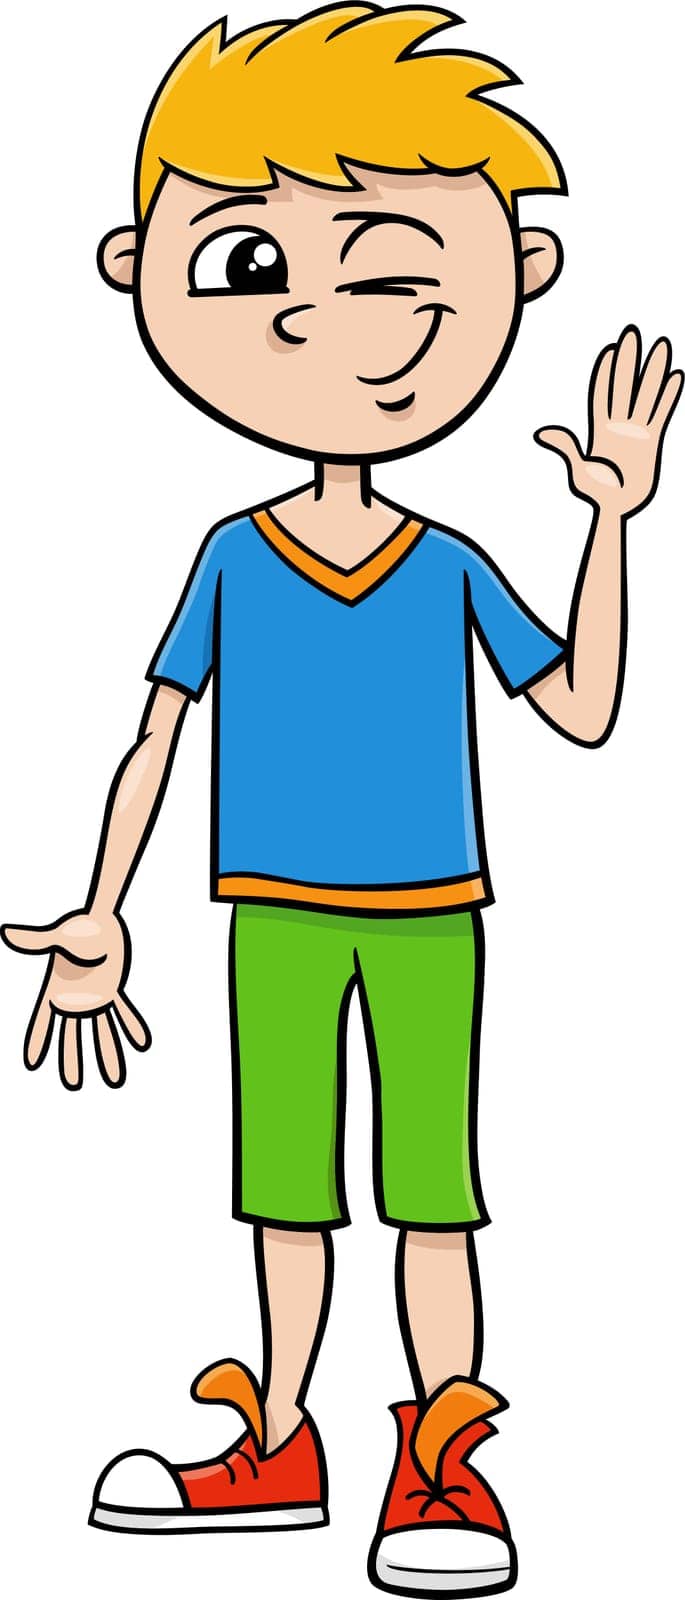 Cartoon illustration of elementary or teen age boy character